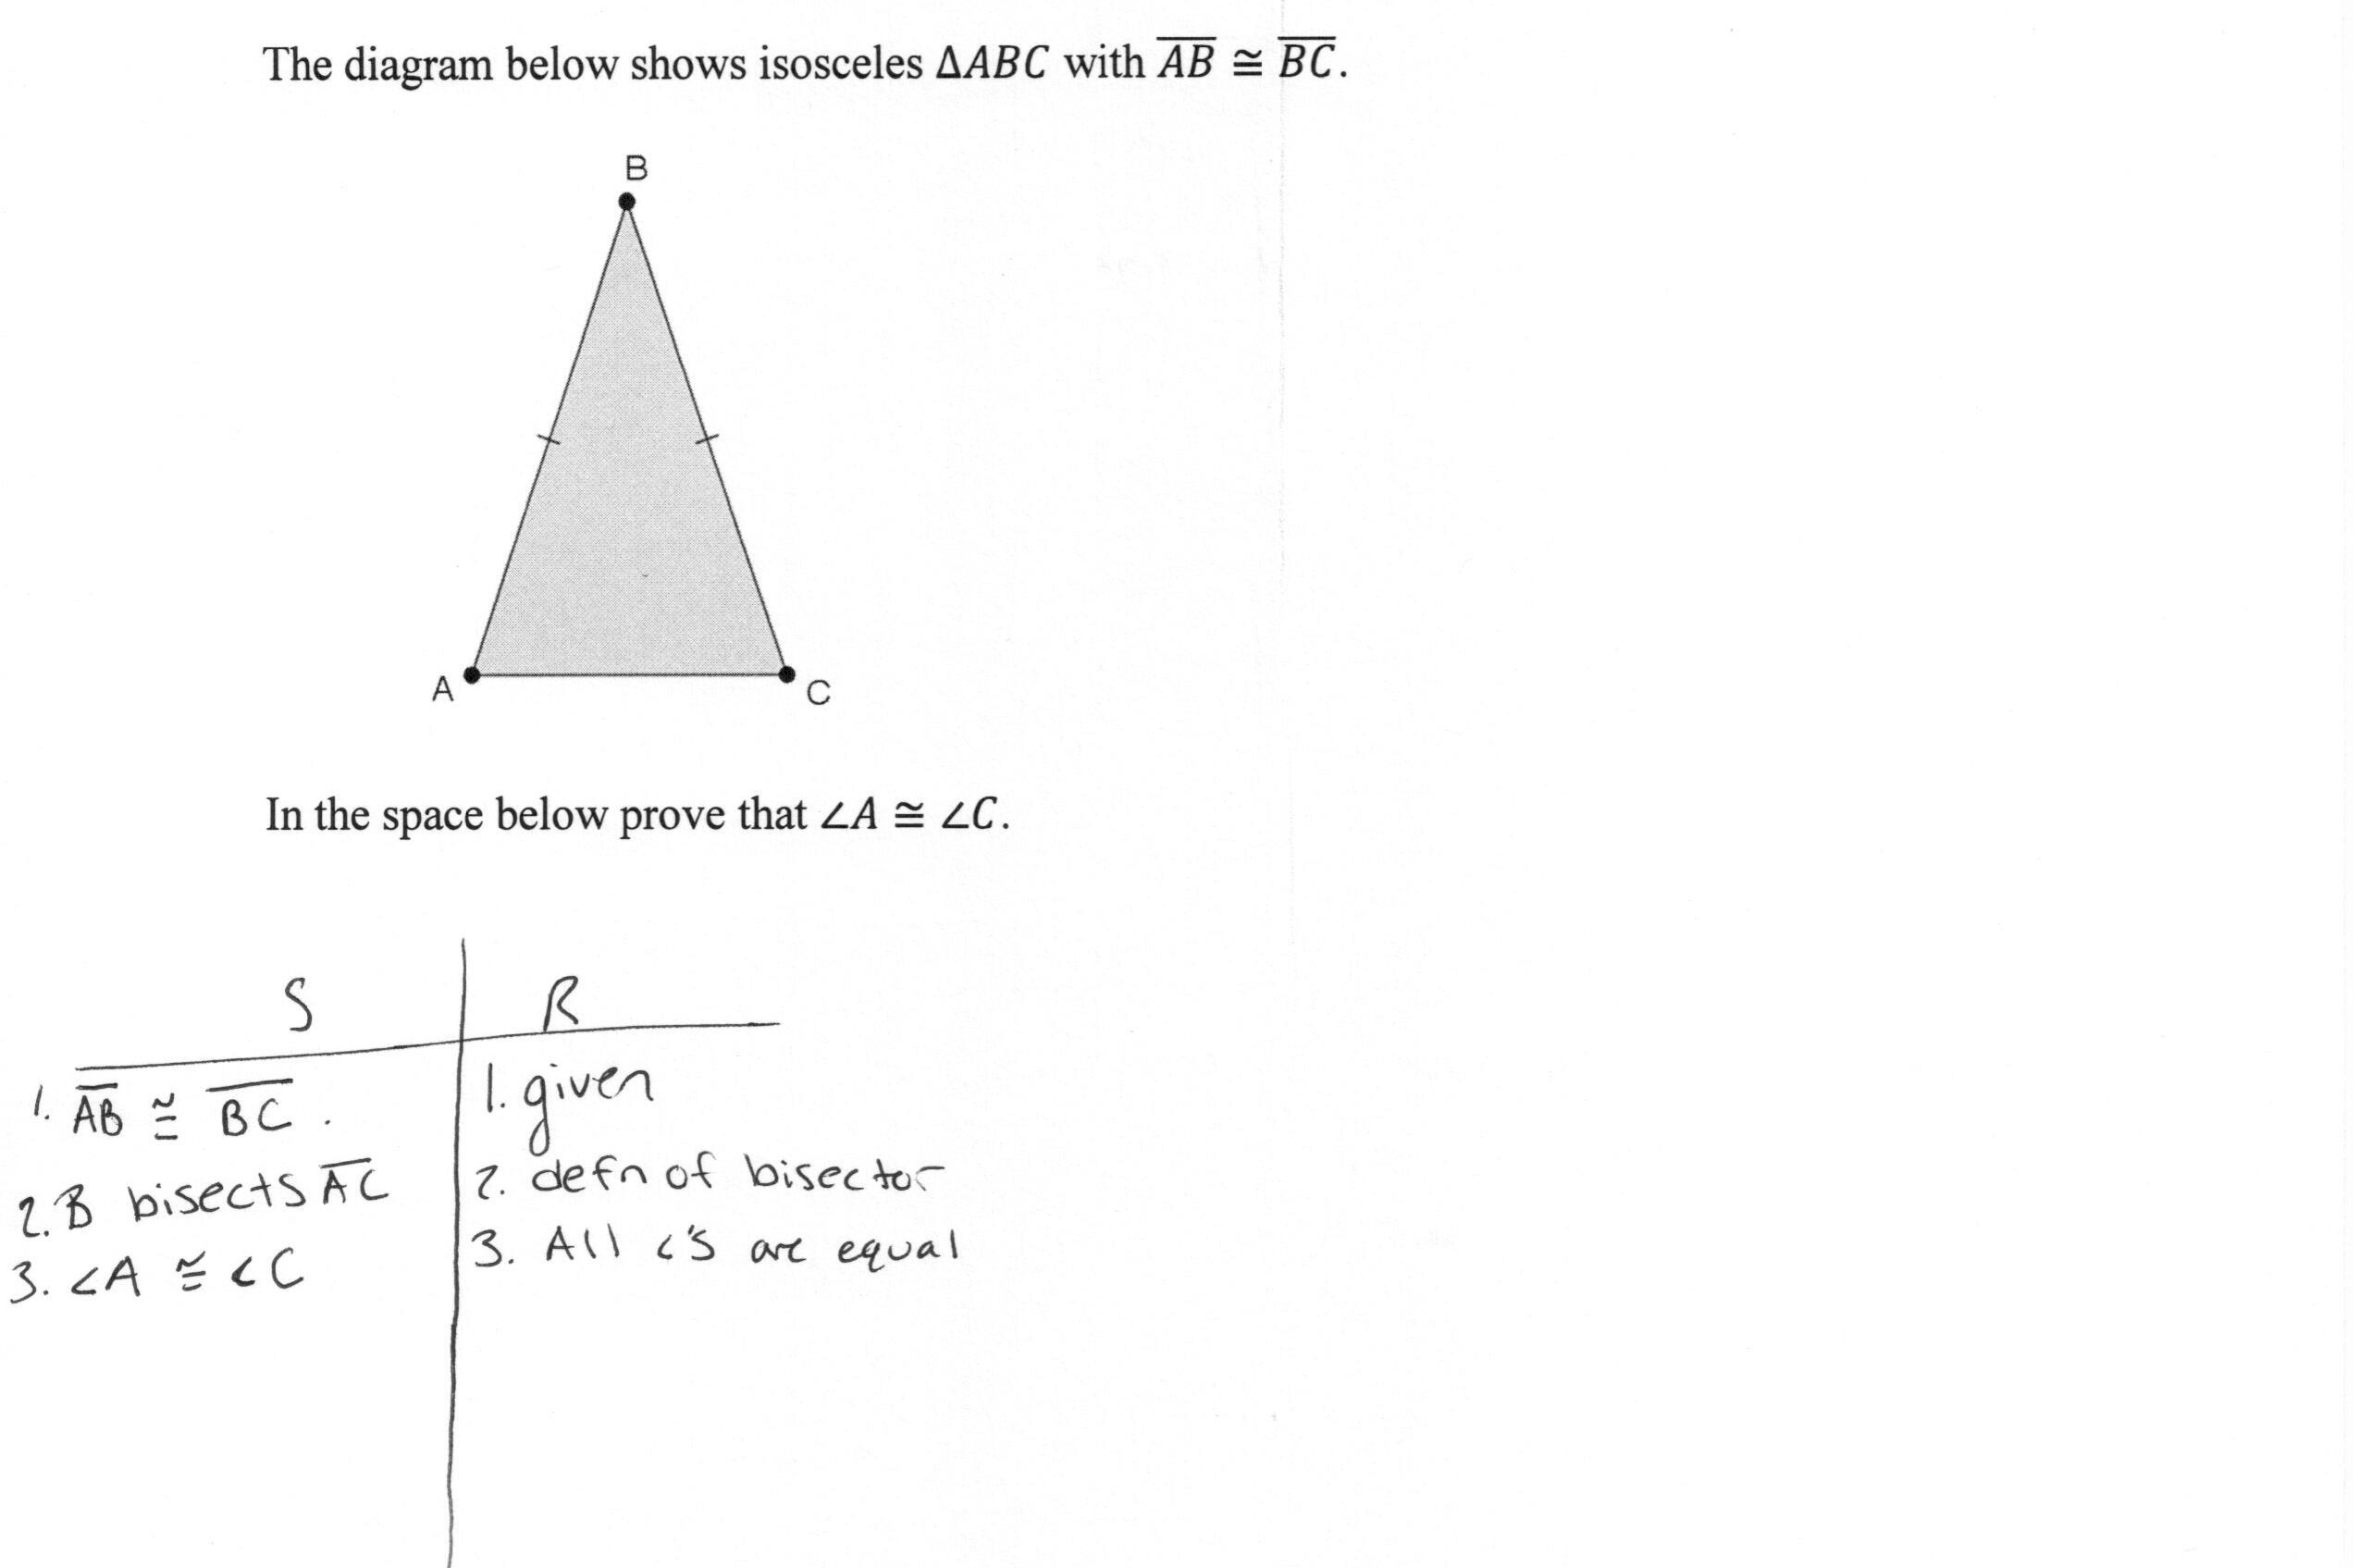 finding base isosceles triangle angles given